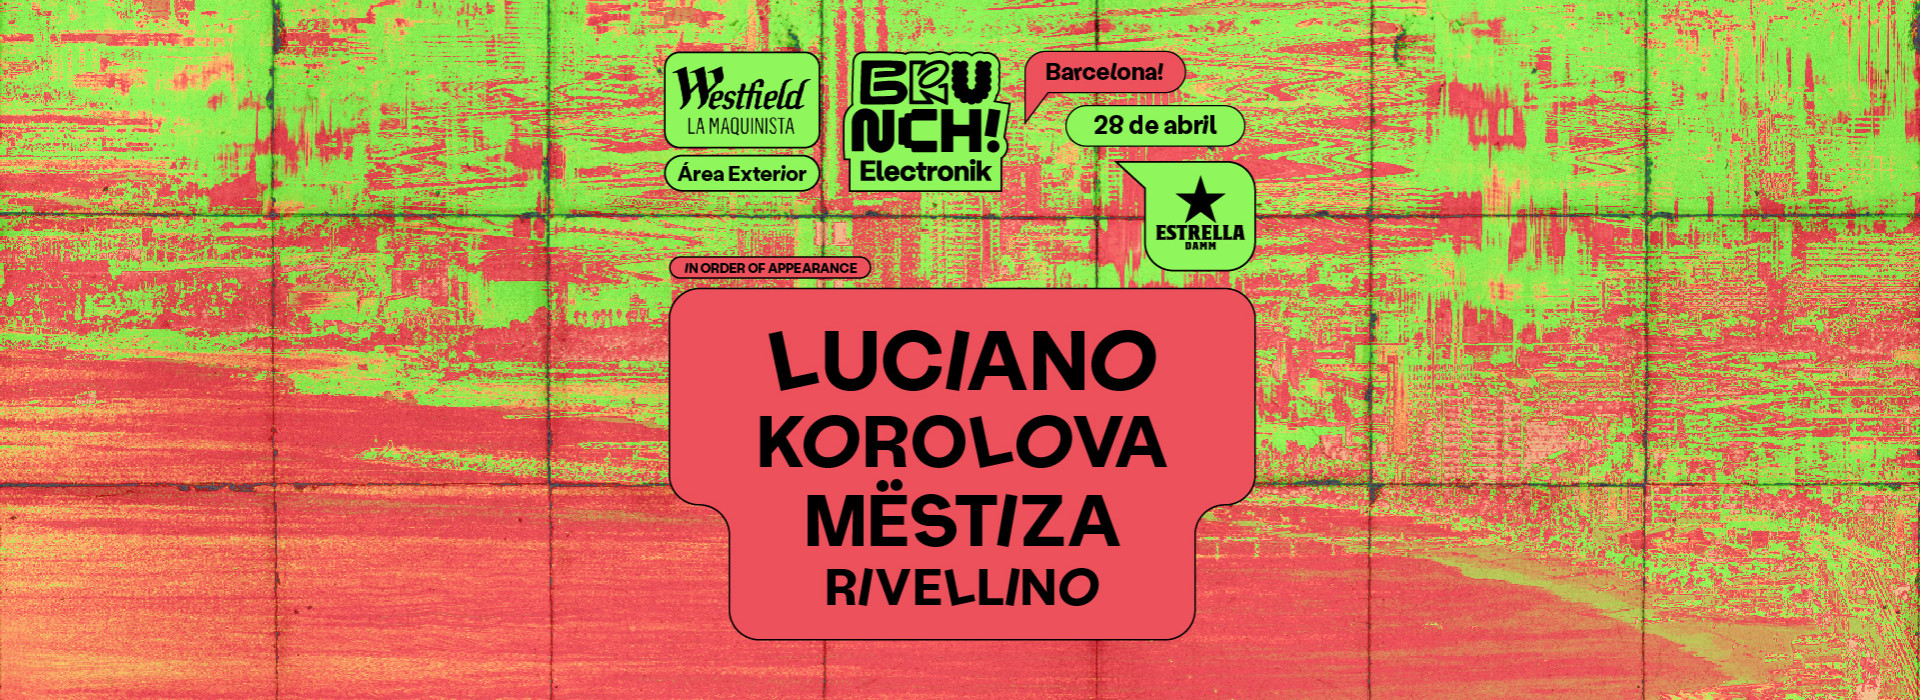 Brunch Electronik #6 Luciano, Korolova, Mëstiza y Rivellino